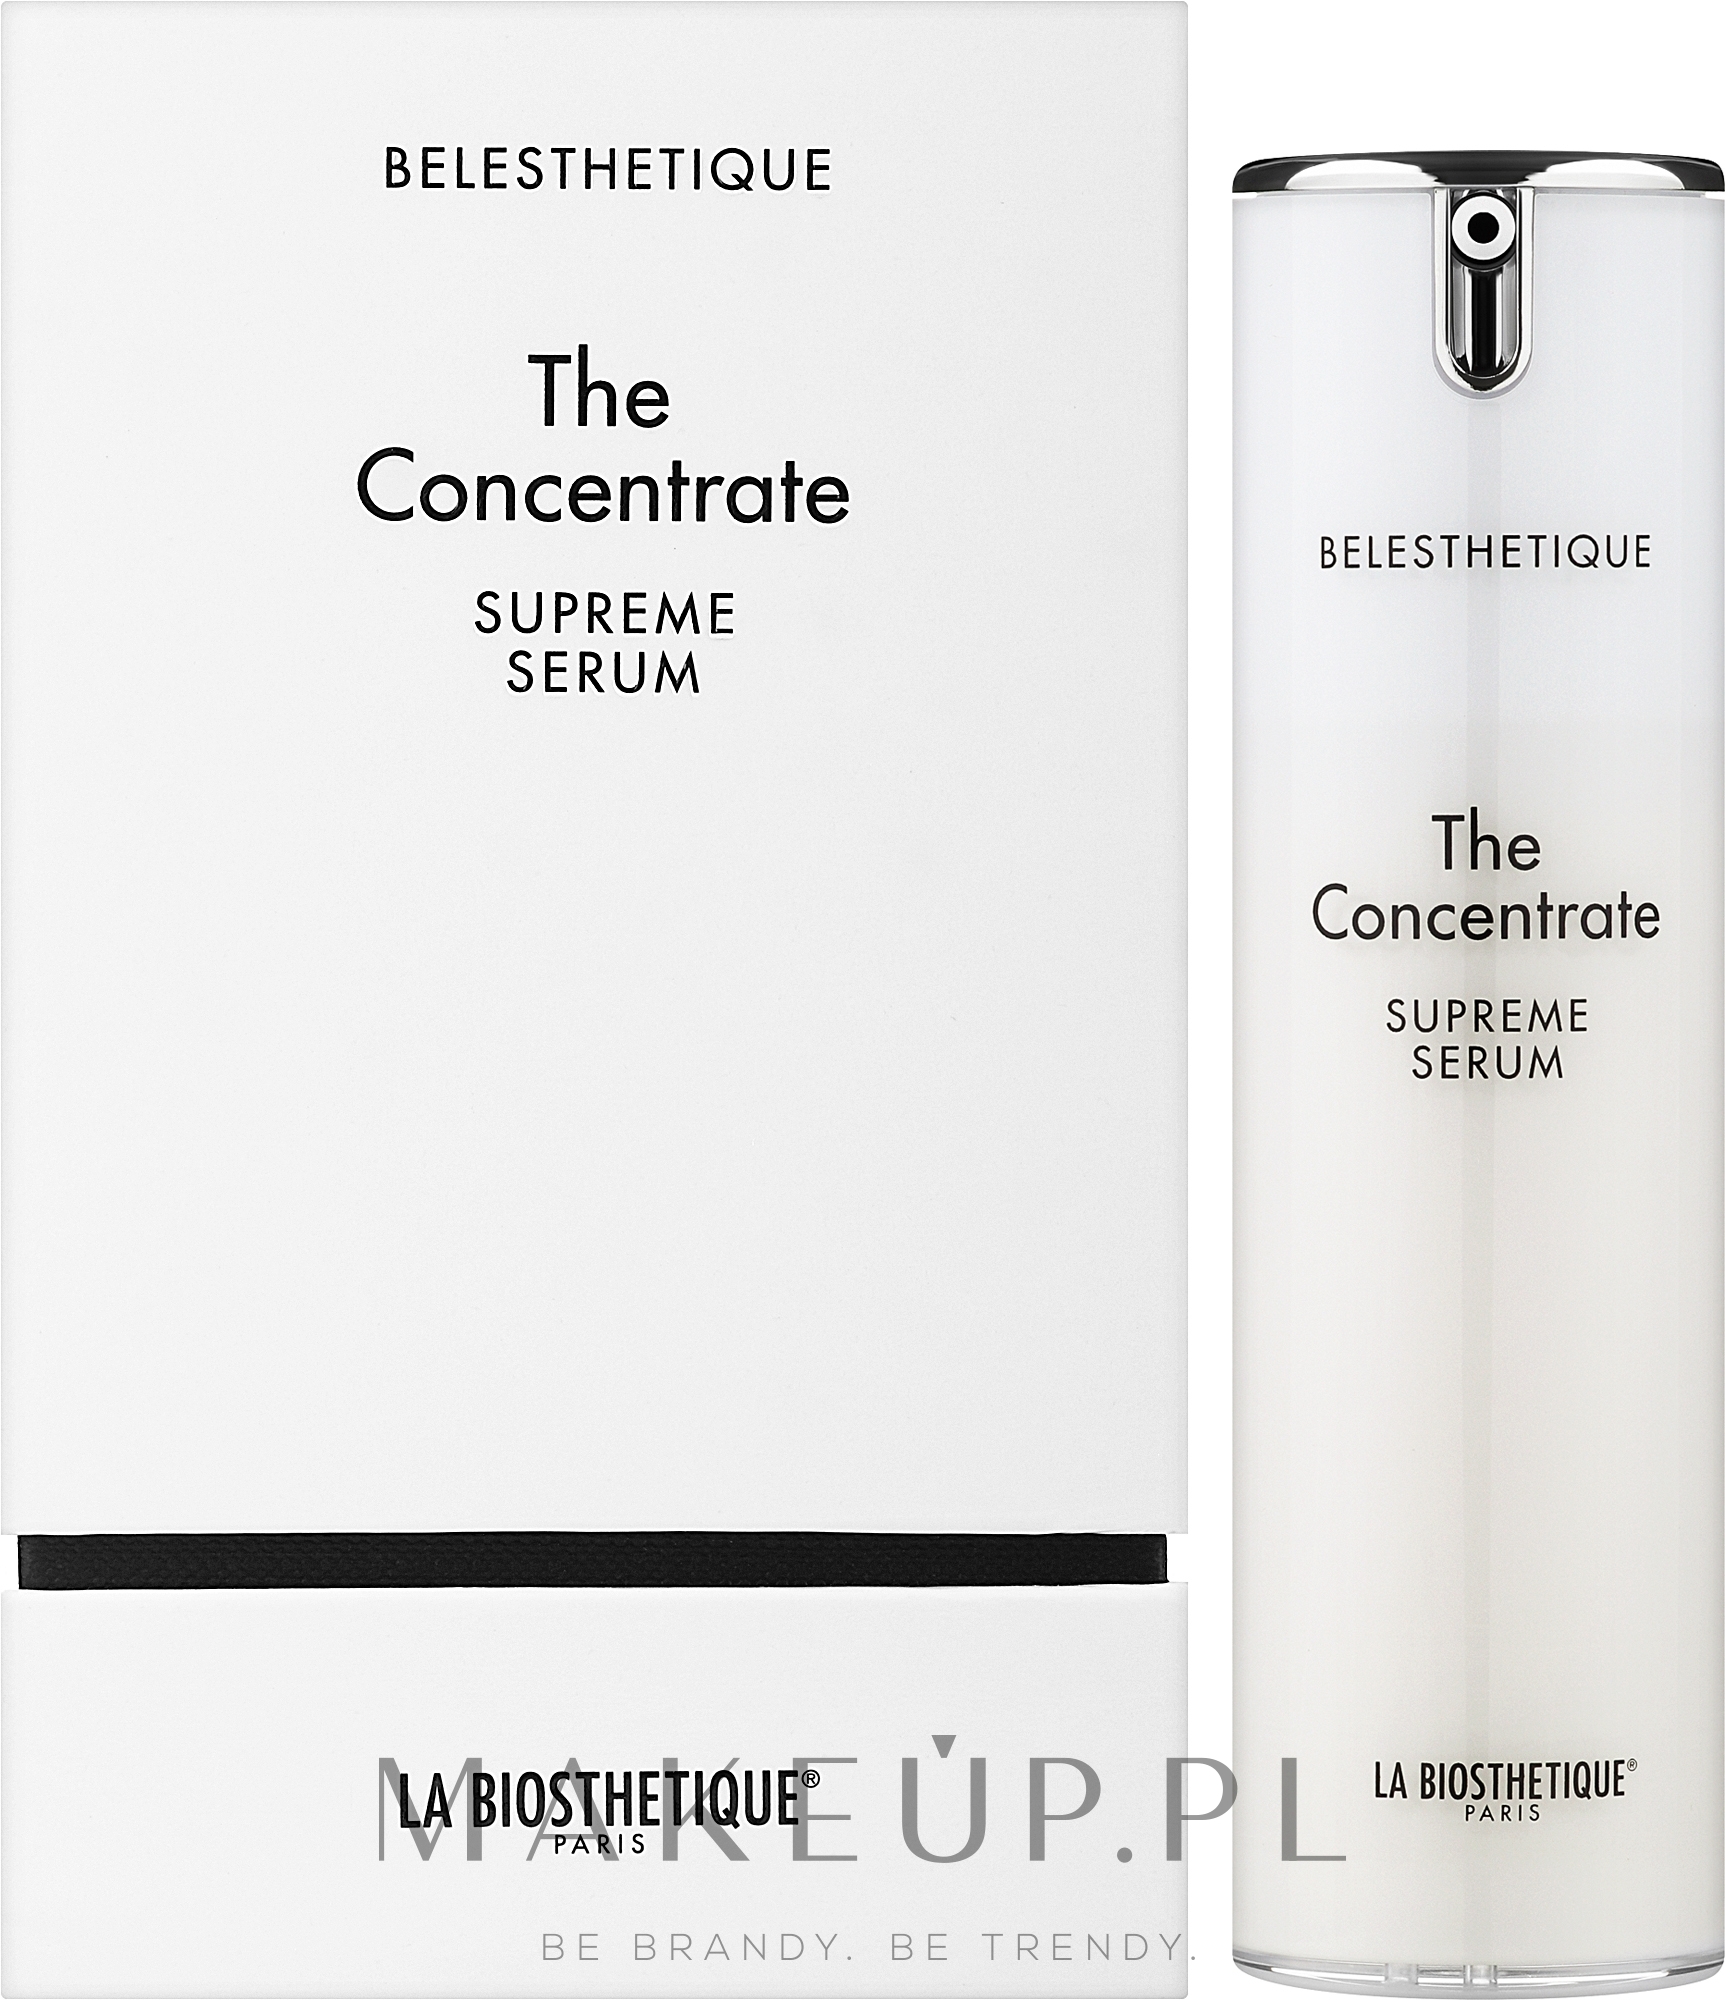 Koncentrat liftingujący do skóry wokół oczu i ust - La Biosthetique Belesthetique The Concentrate Supreme Serum — Zdjęcie 30 ml